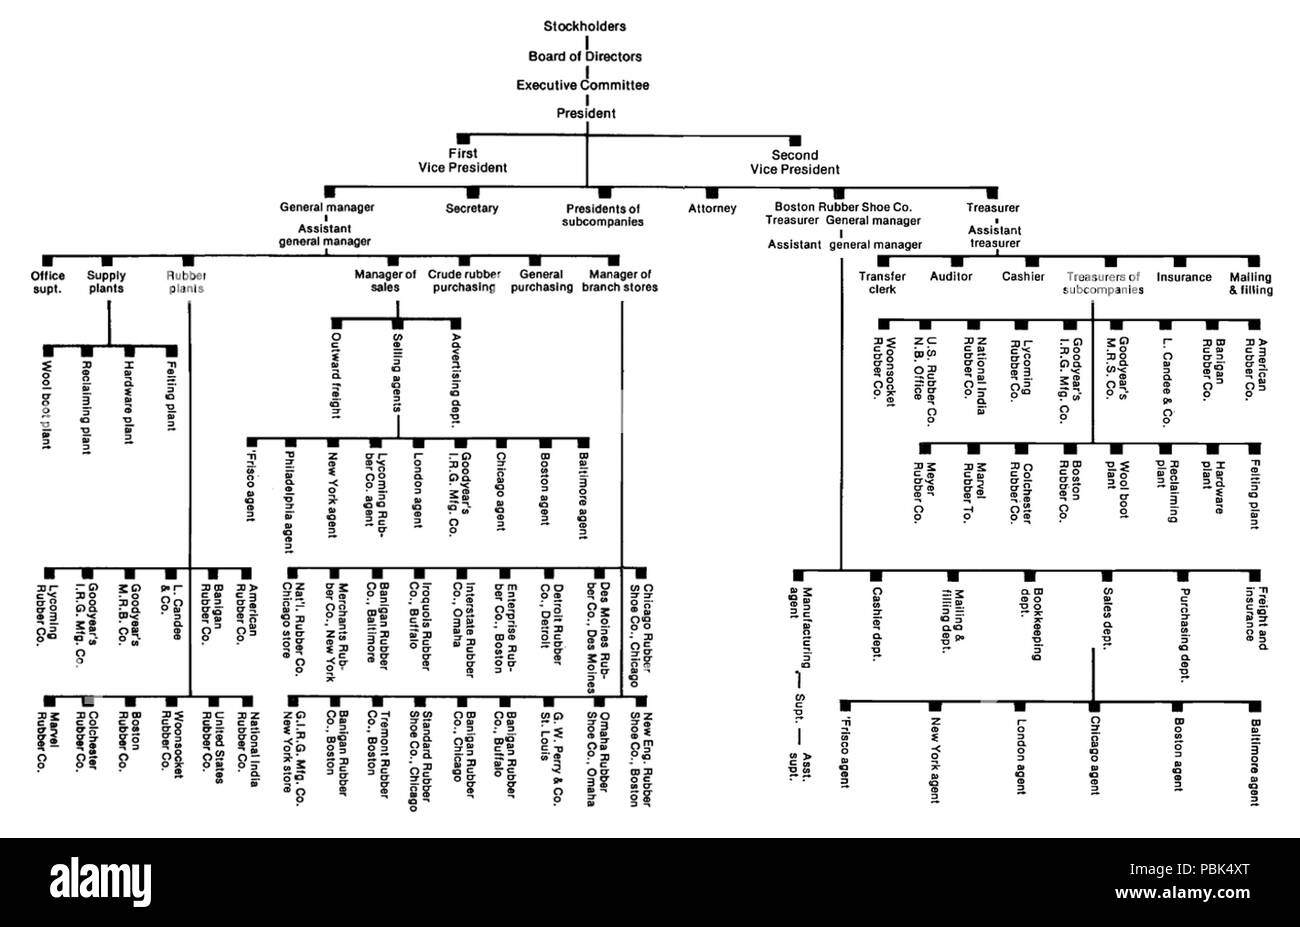 Estée Lauder Companies Inc.'s ownership structure in 1996 O denotes